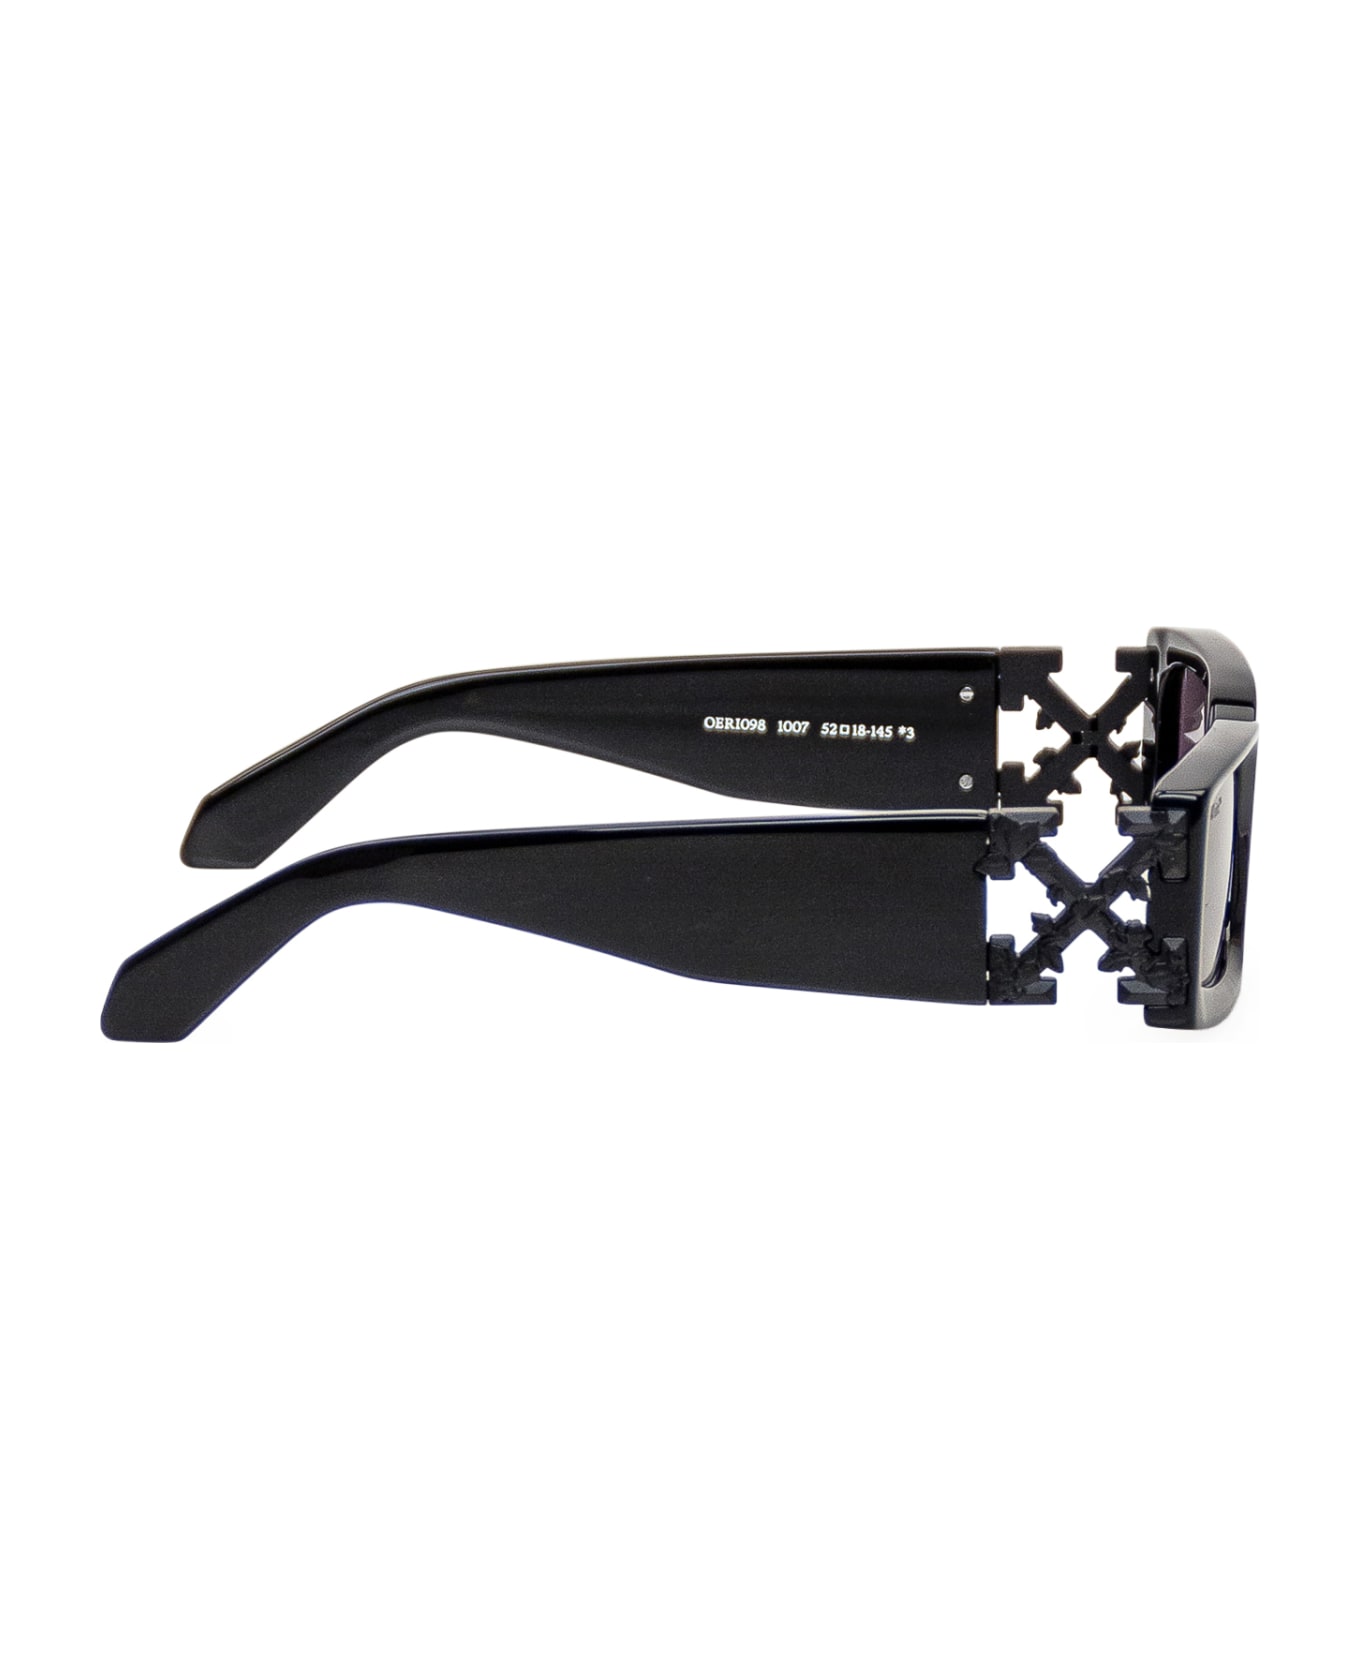 Off-White Roma Sunglasses - BLACK DARK サングラス